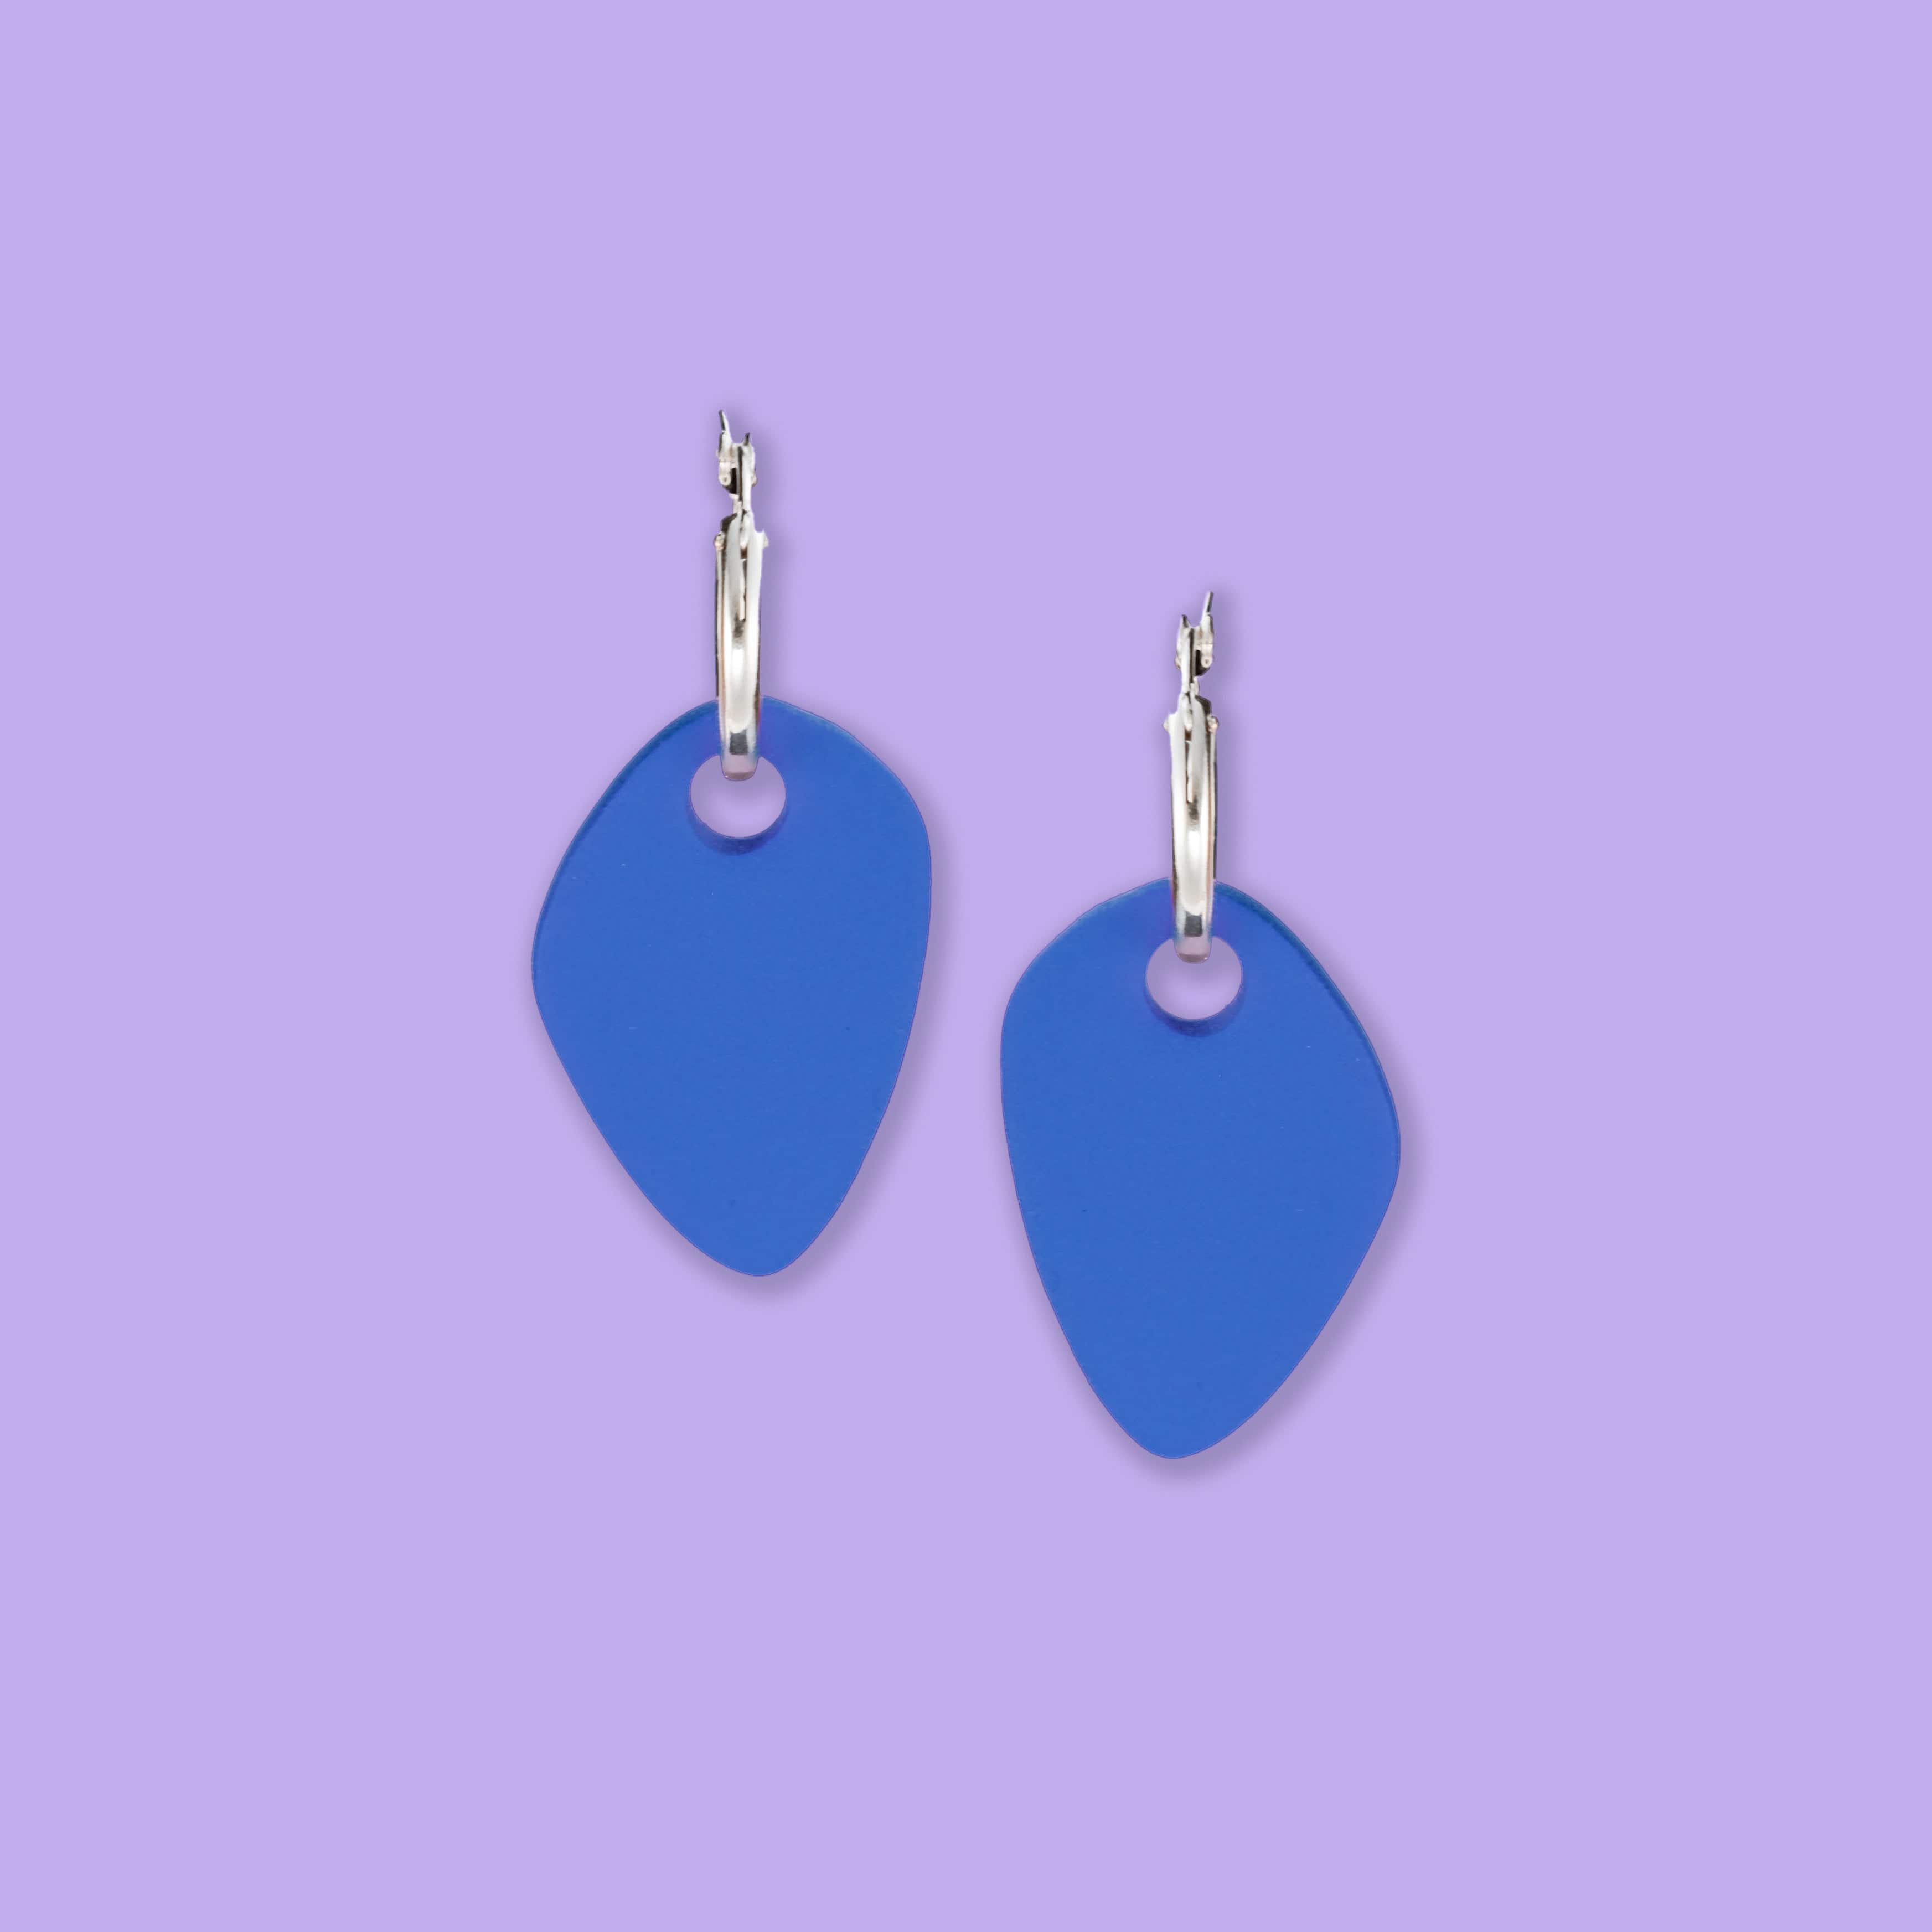 Organic shapes, artistic inspired, lightweight, dangly Calder inspired hoop earrings Calder #color_blue